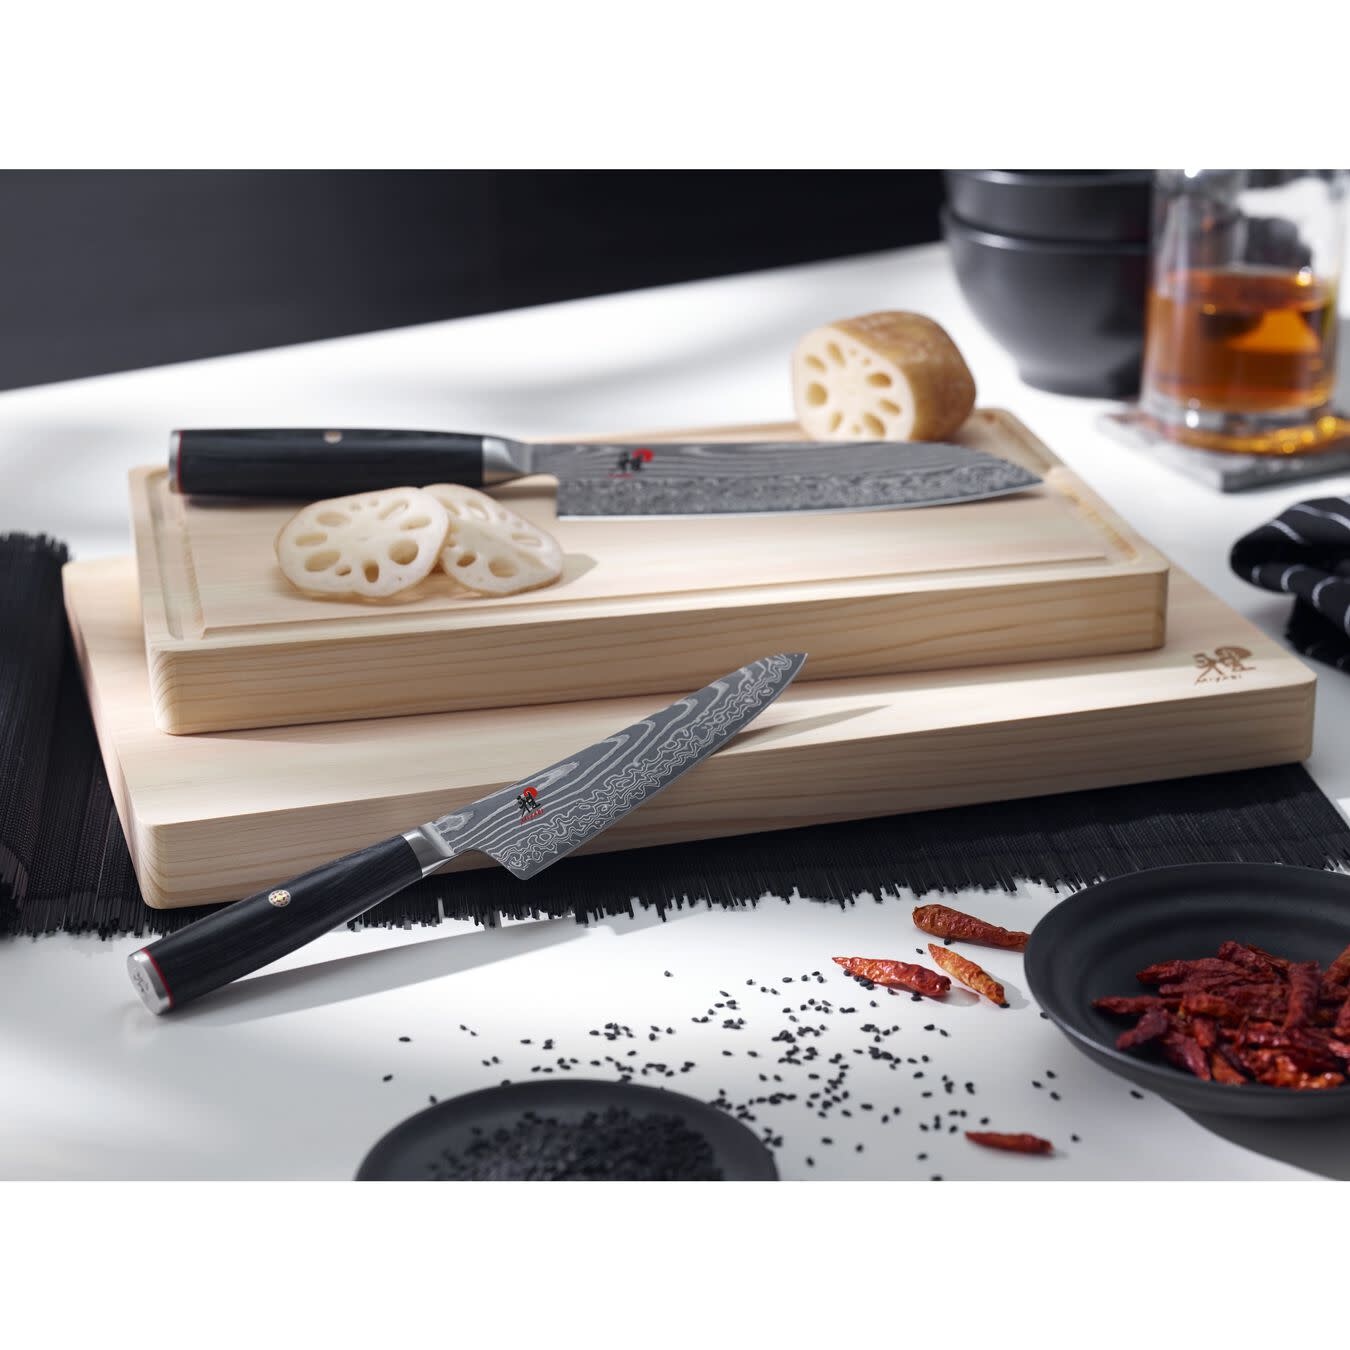 Miyabi Kaizen II 8-inch Chef's Knife, 8-inch - Ralphs